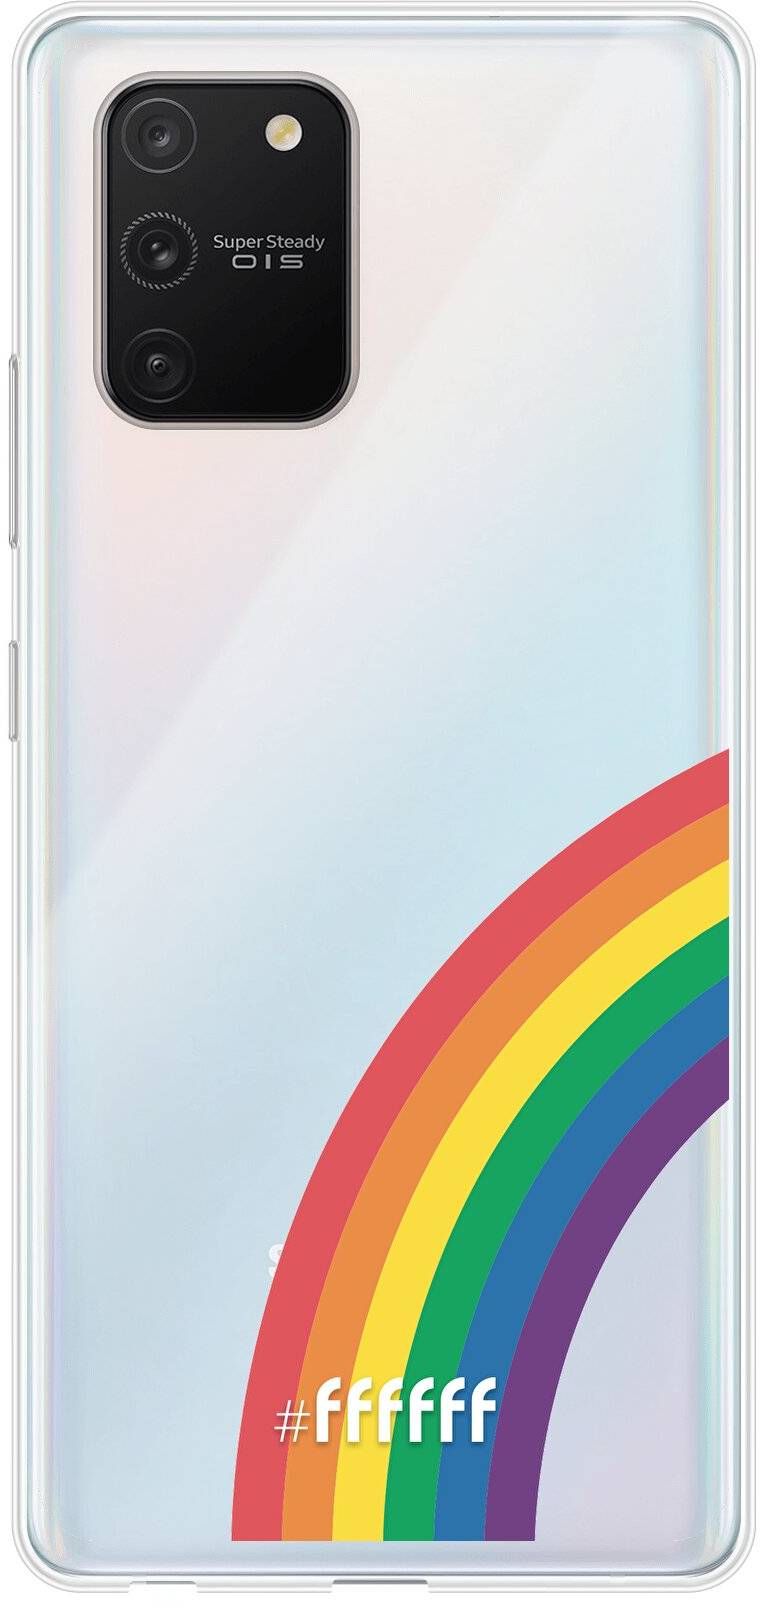 #LGBT - Rainbow Galaxy S10 Lite